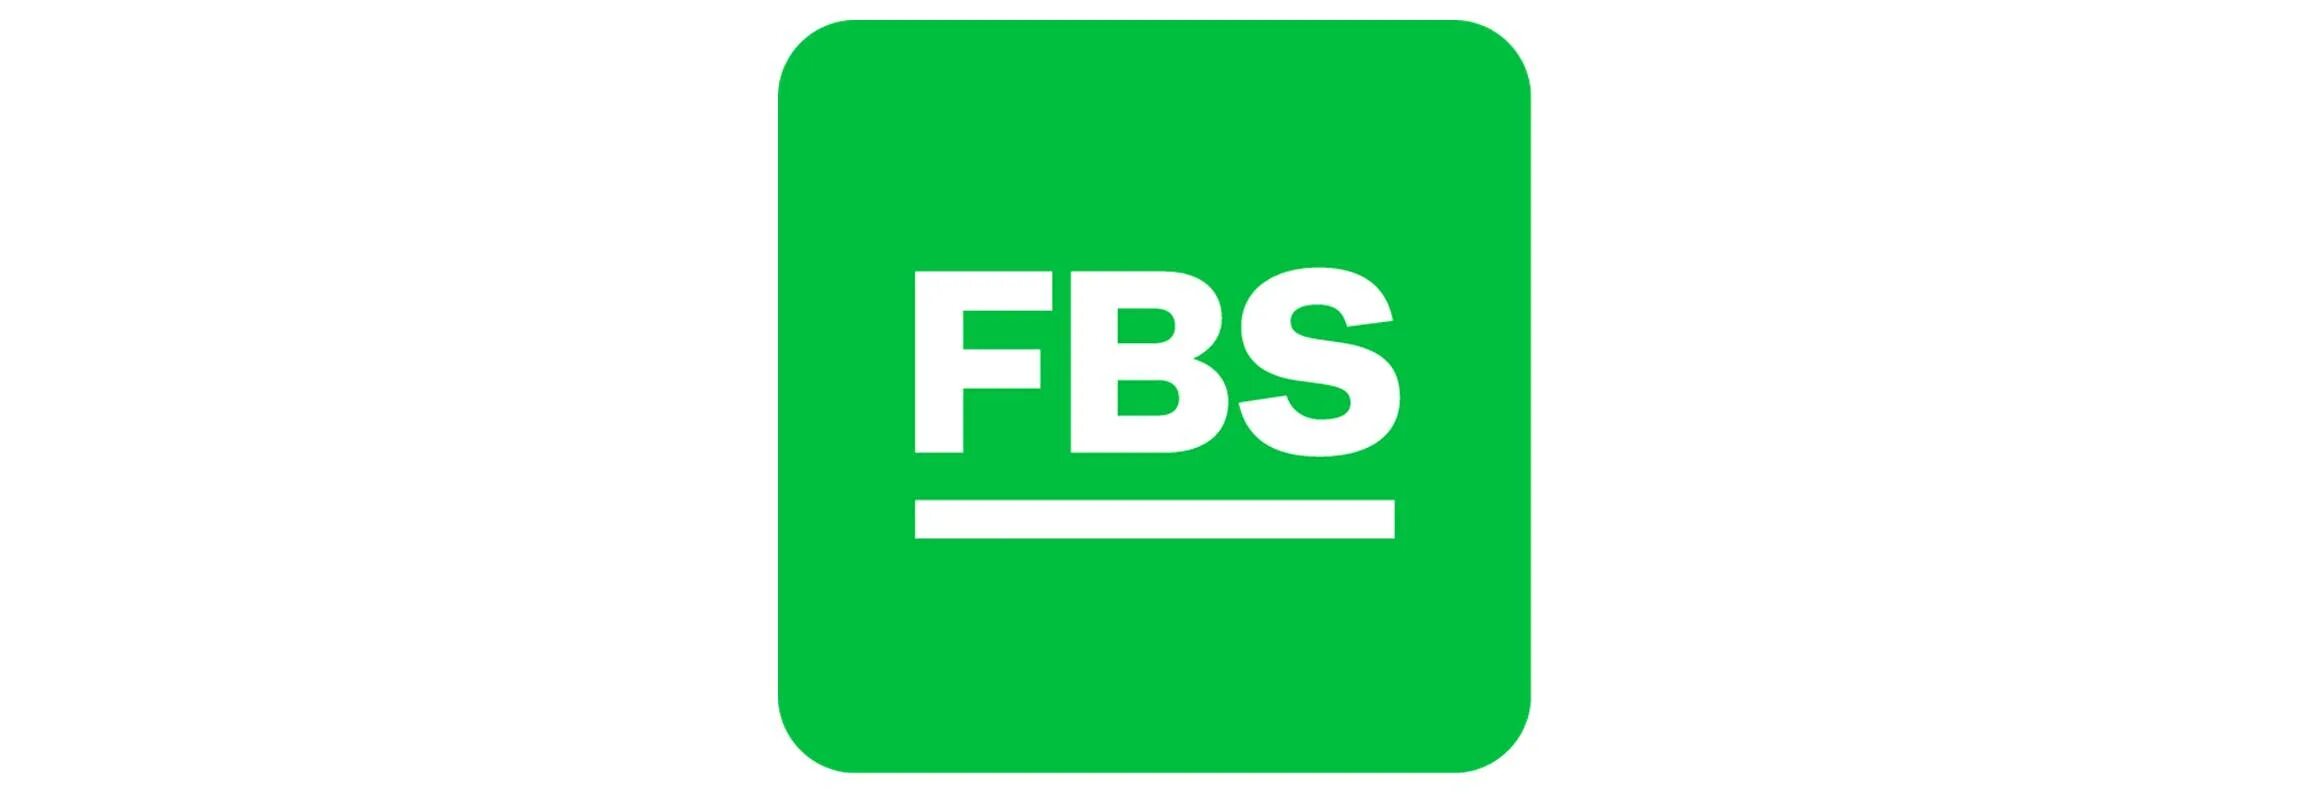 Вб fbs. FBS. FBS broker. FBS logo. Иконка FBS.